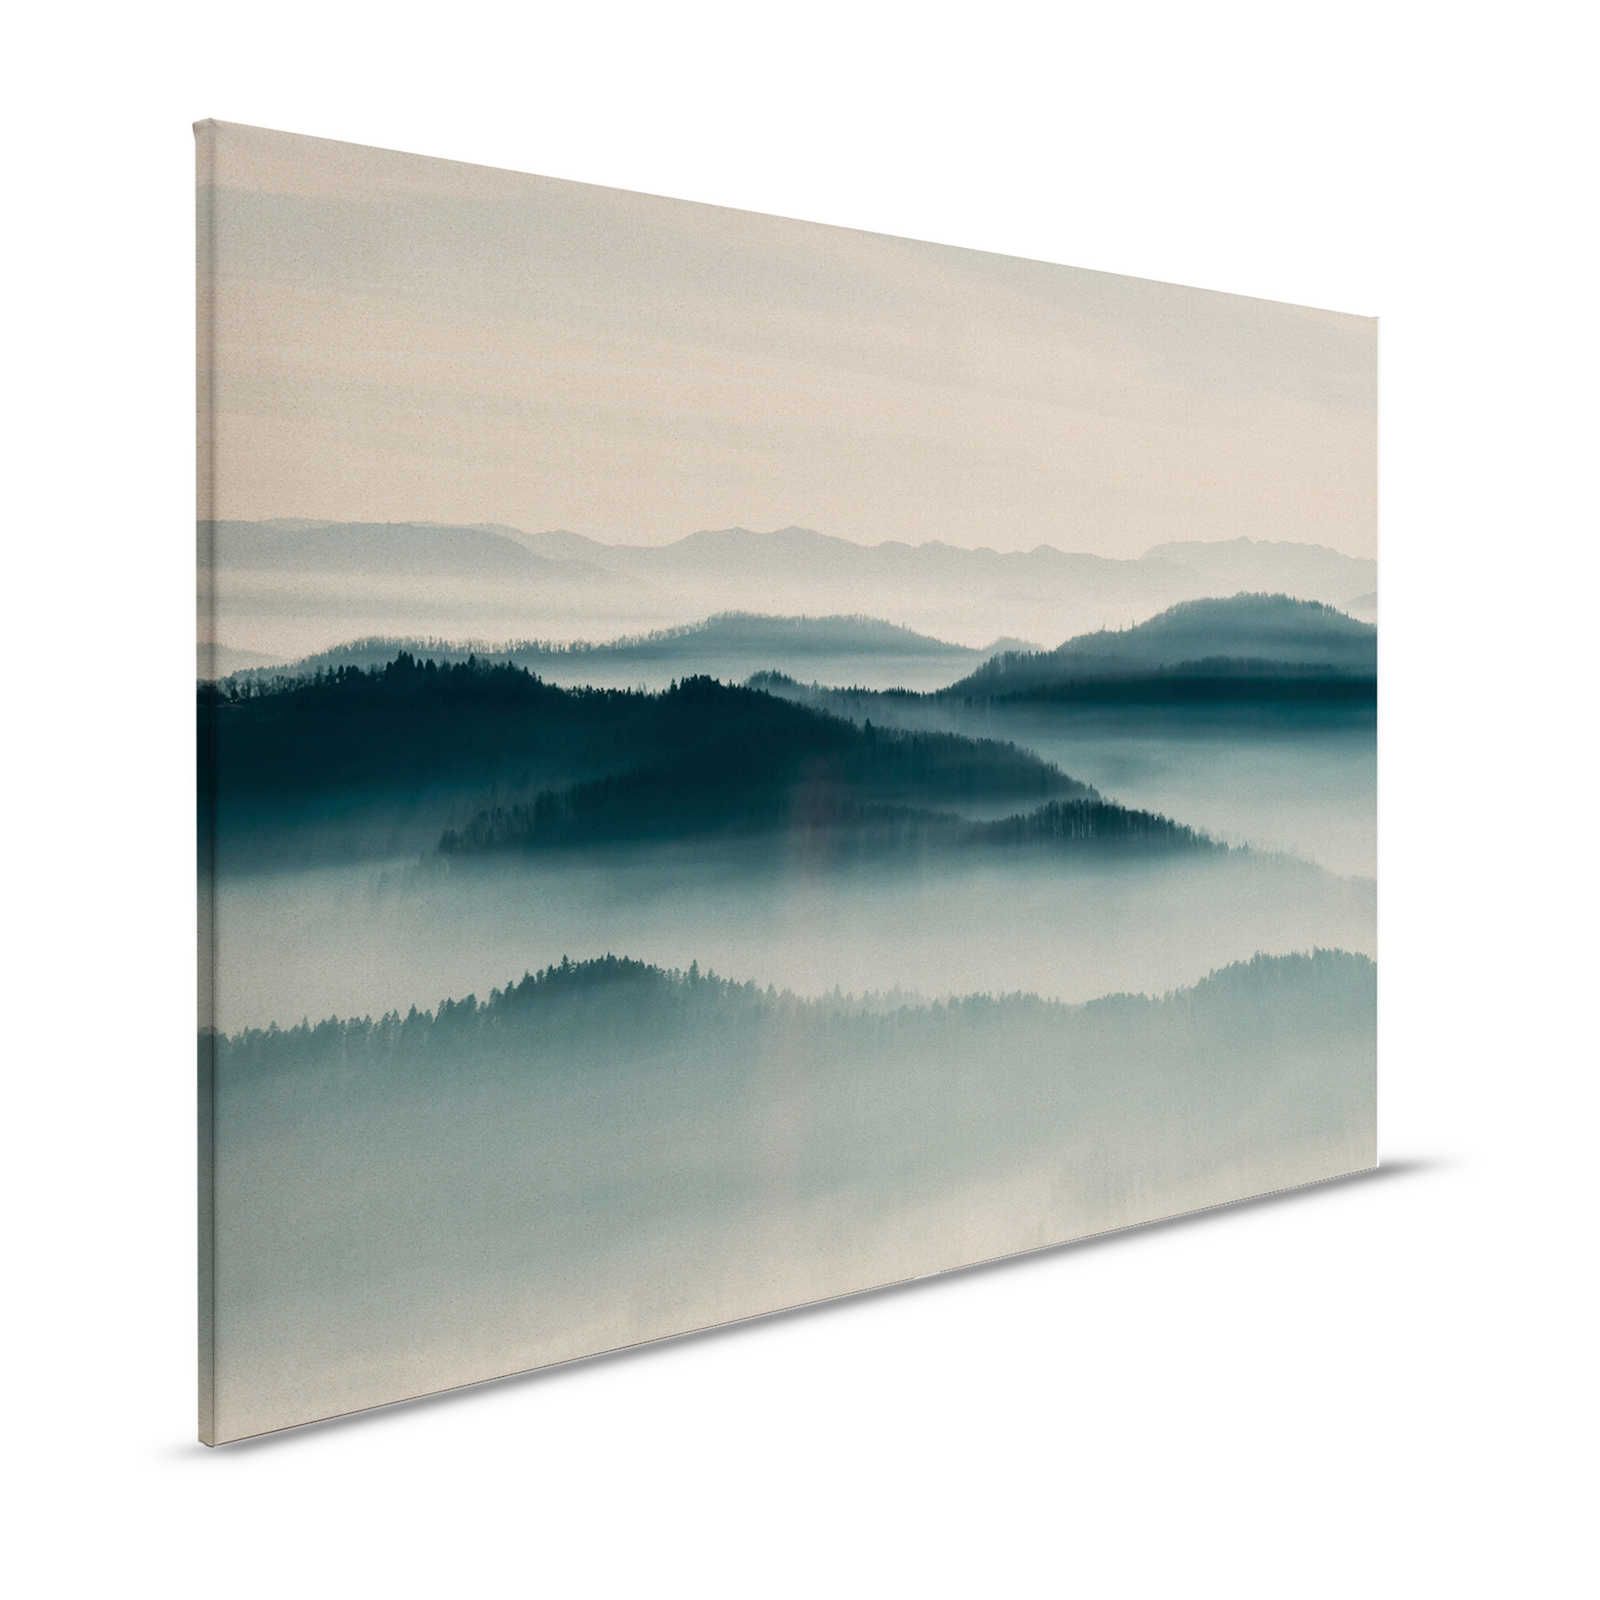         Horizon 1 - Leinwandbild mit Nebel-Landschaft, Natur Sky Line – 1,20 m x 0,80 m
    